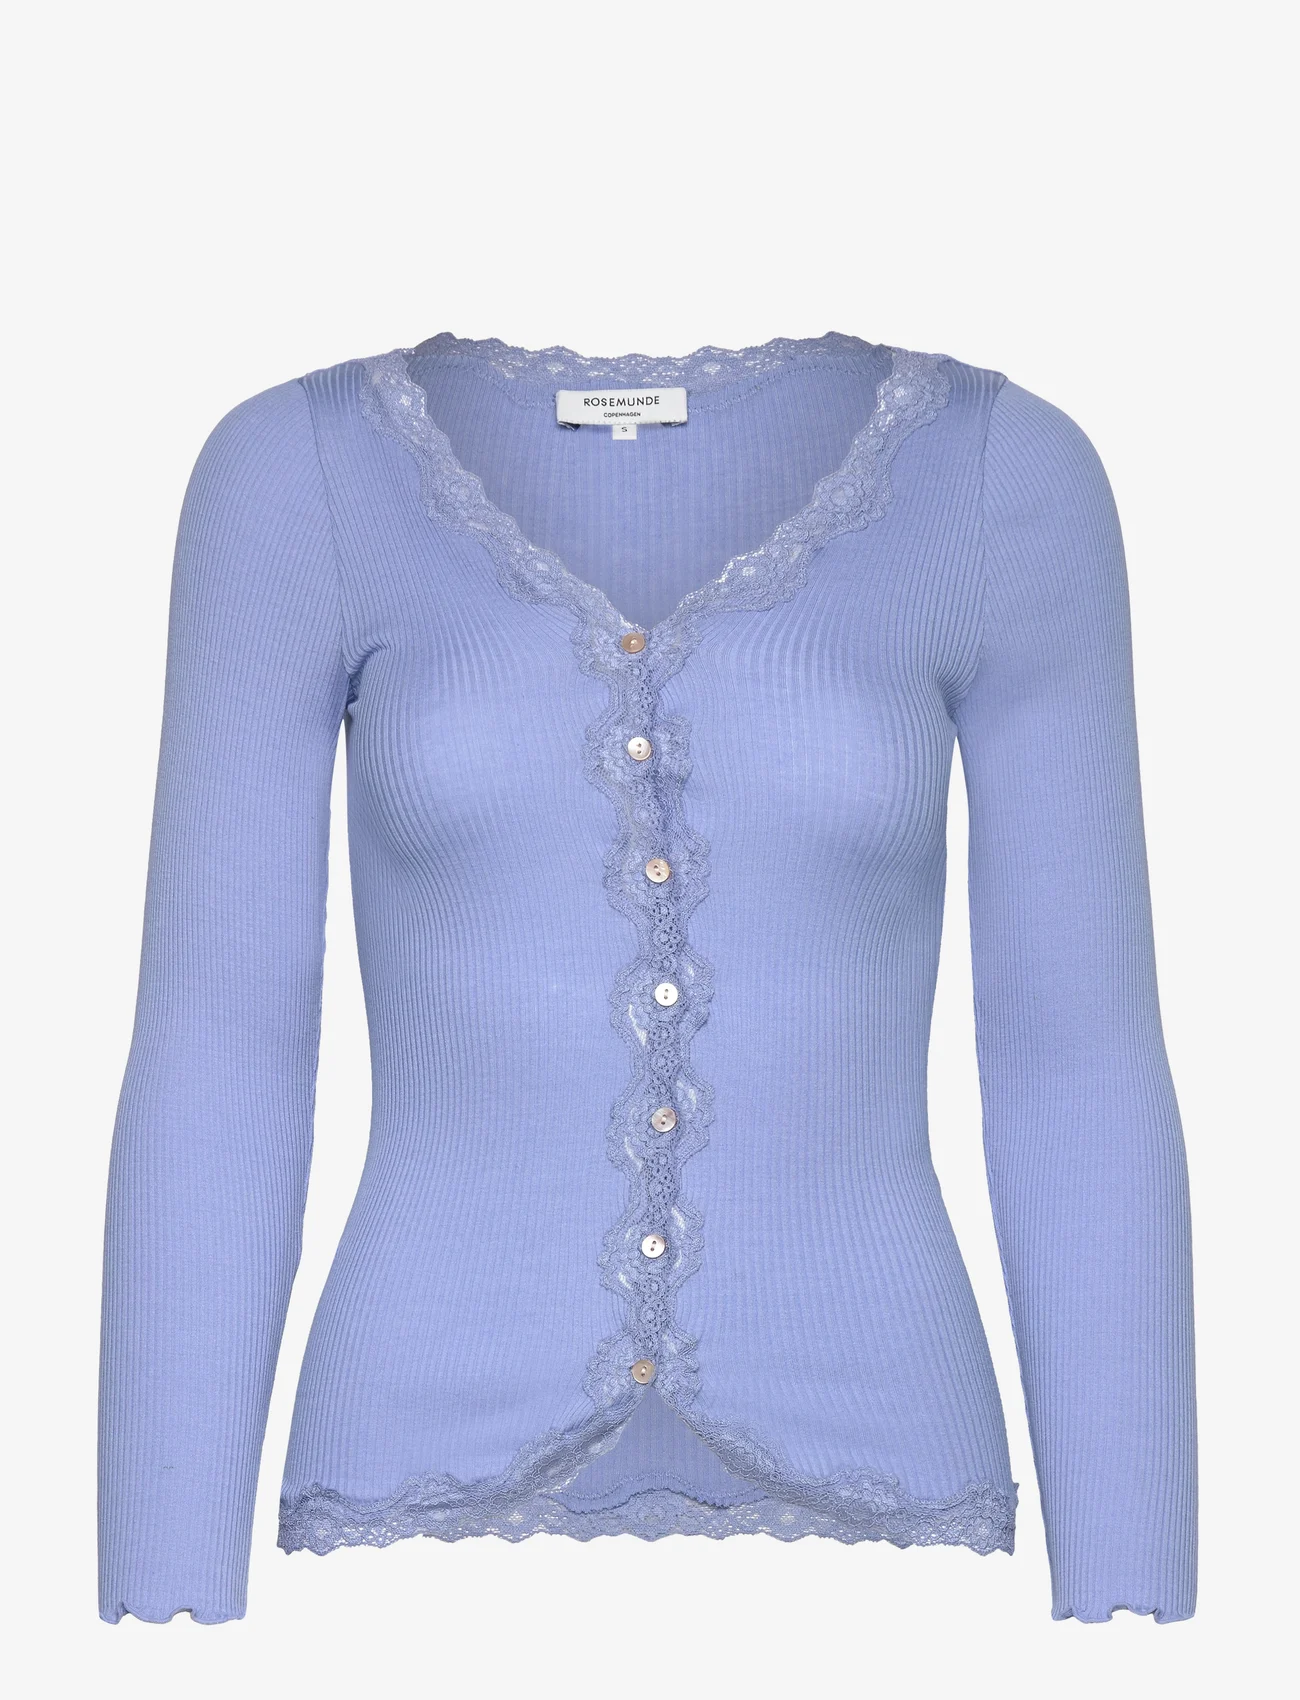 Rosemunde - Silk cardigan w/ lace - swetry rozpinane - blue heaven - 0